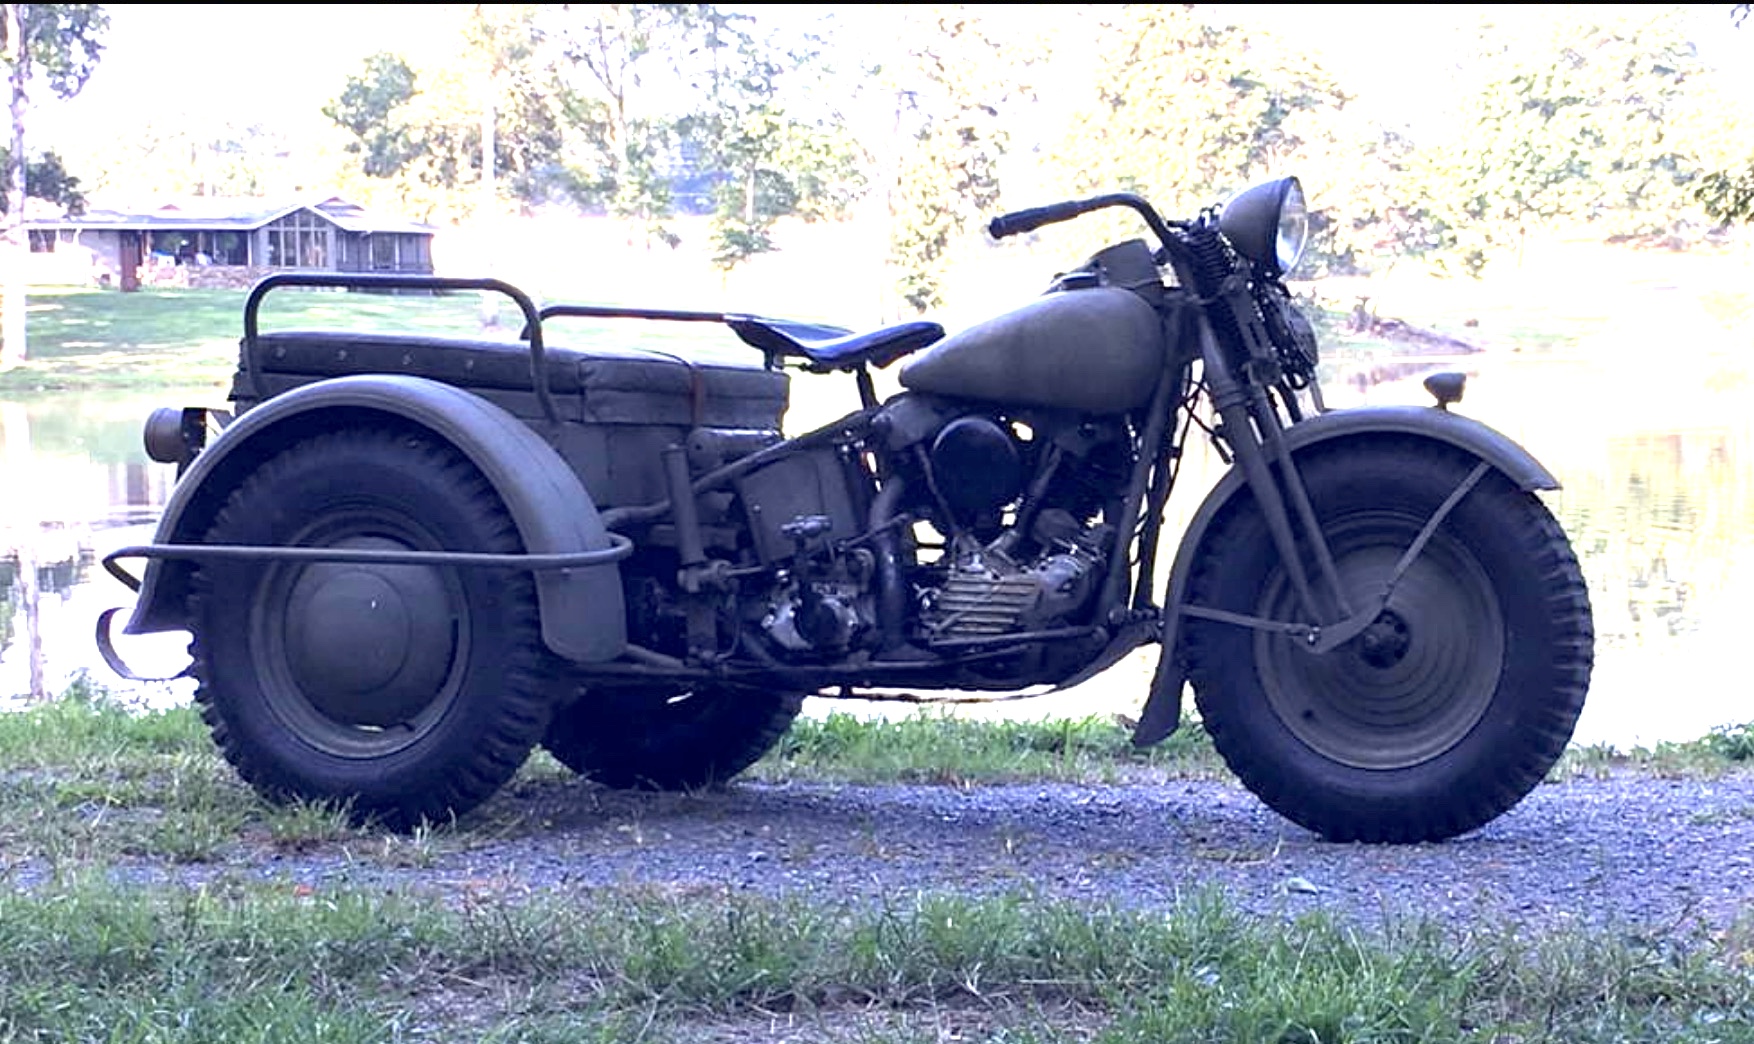 1940 - Harley-Davidson prototipo 40TA Knucklehead - Derecha